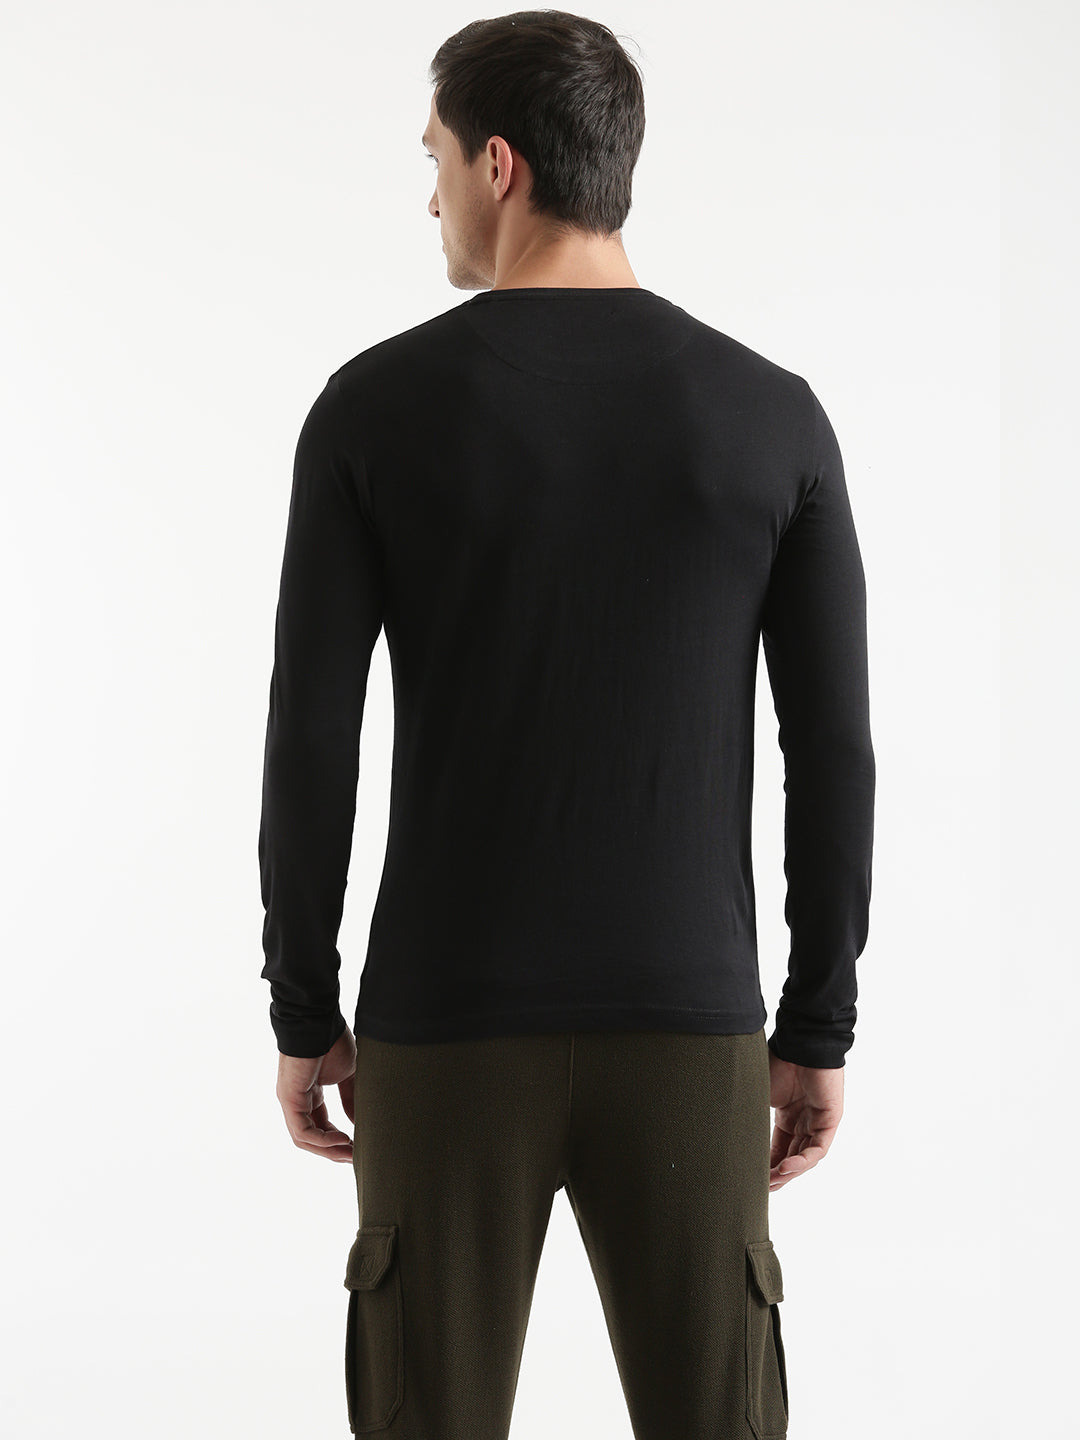 Basic Black Solid T-Shirt